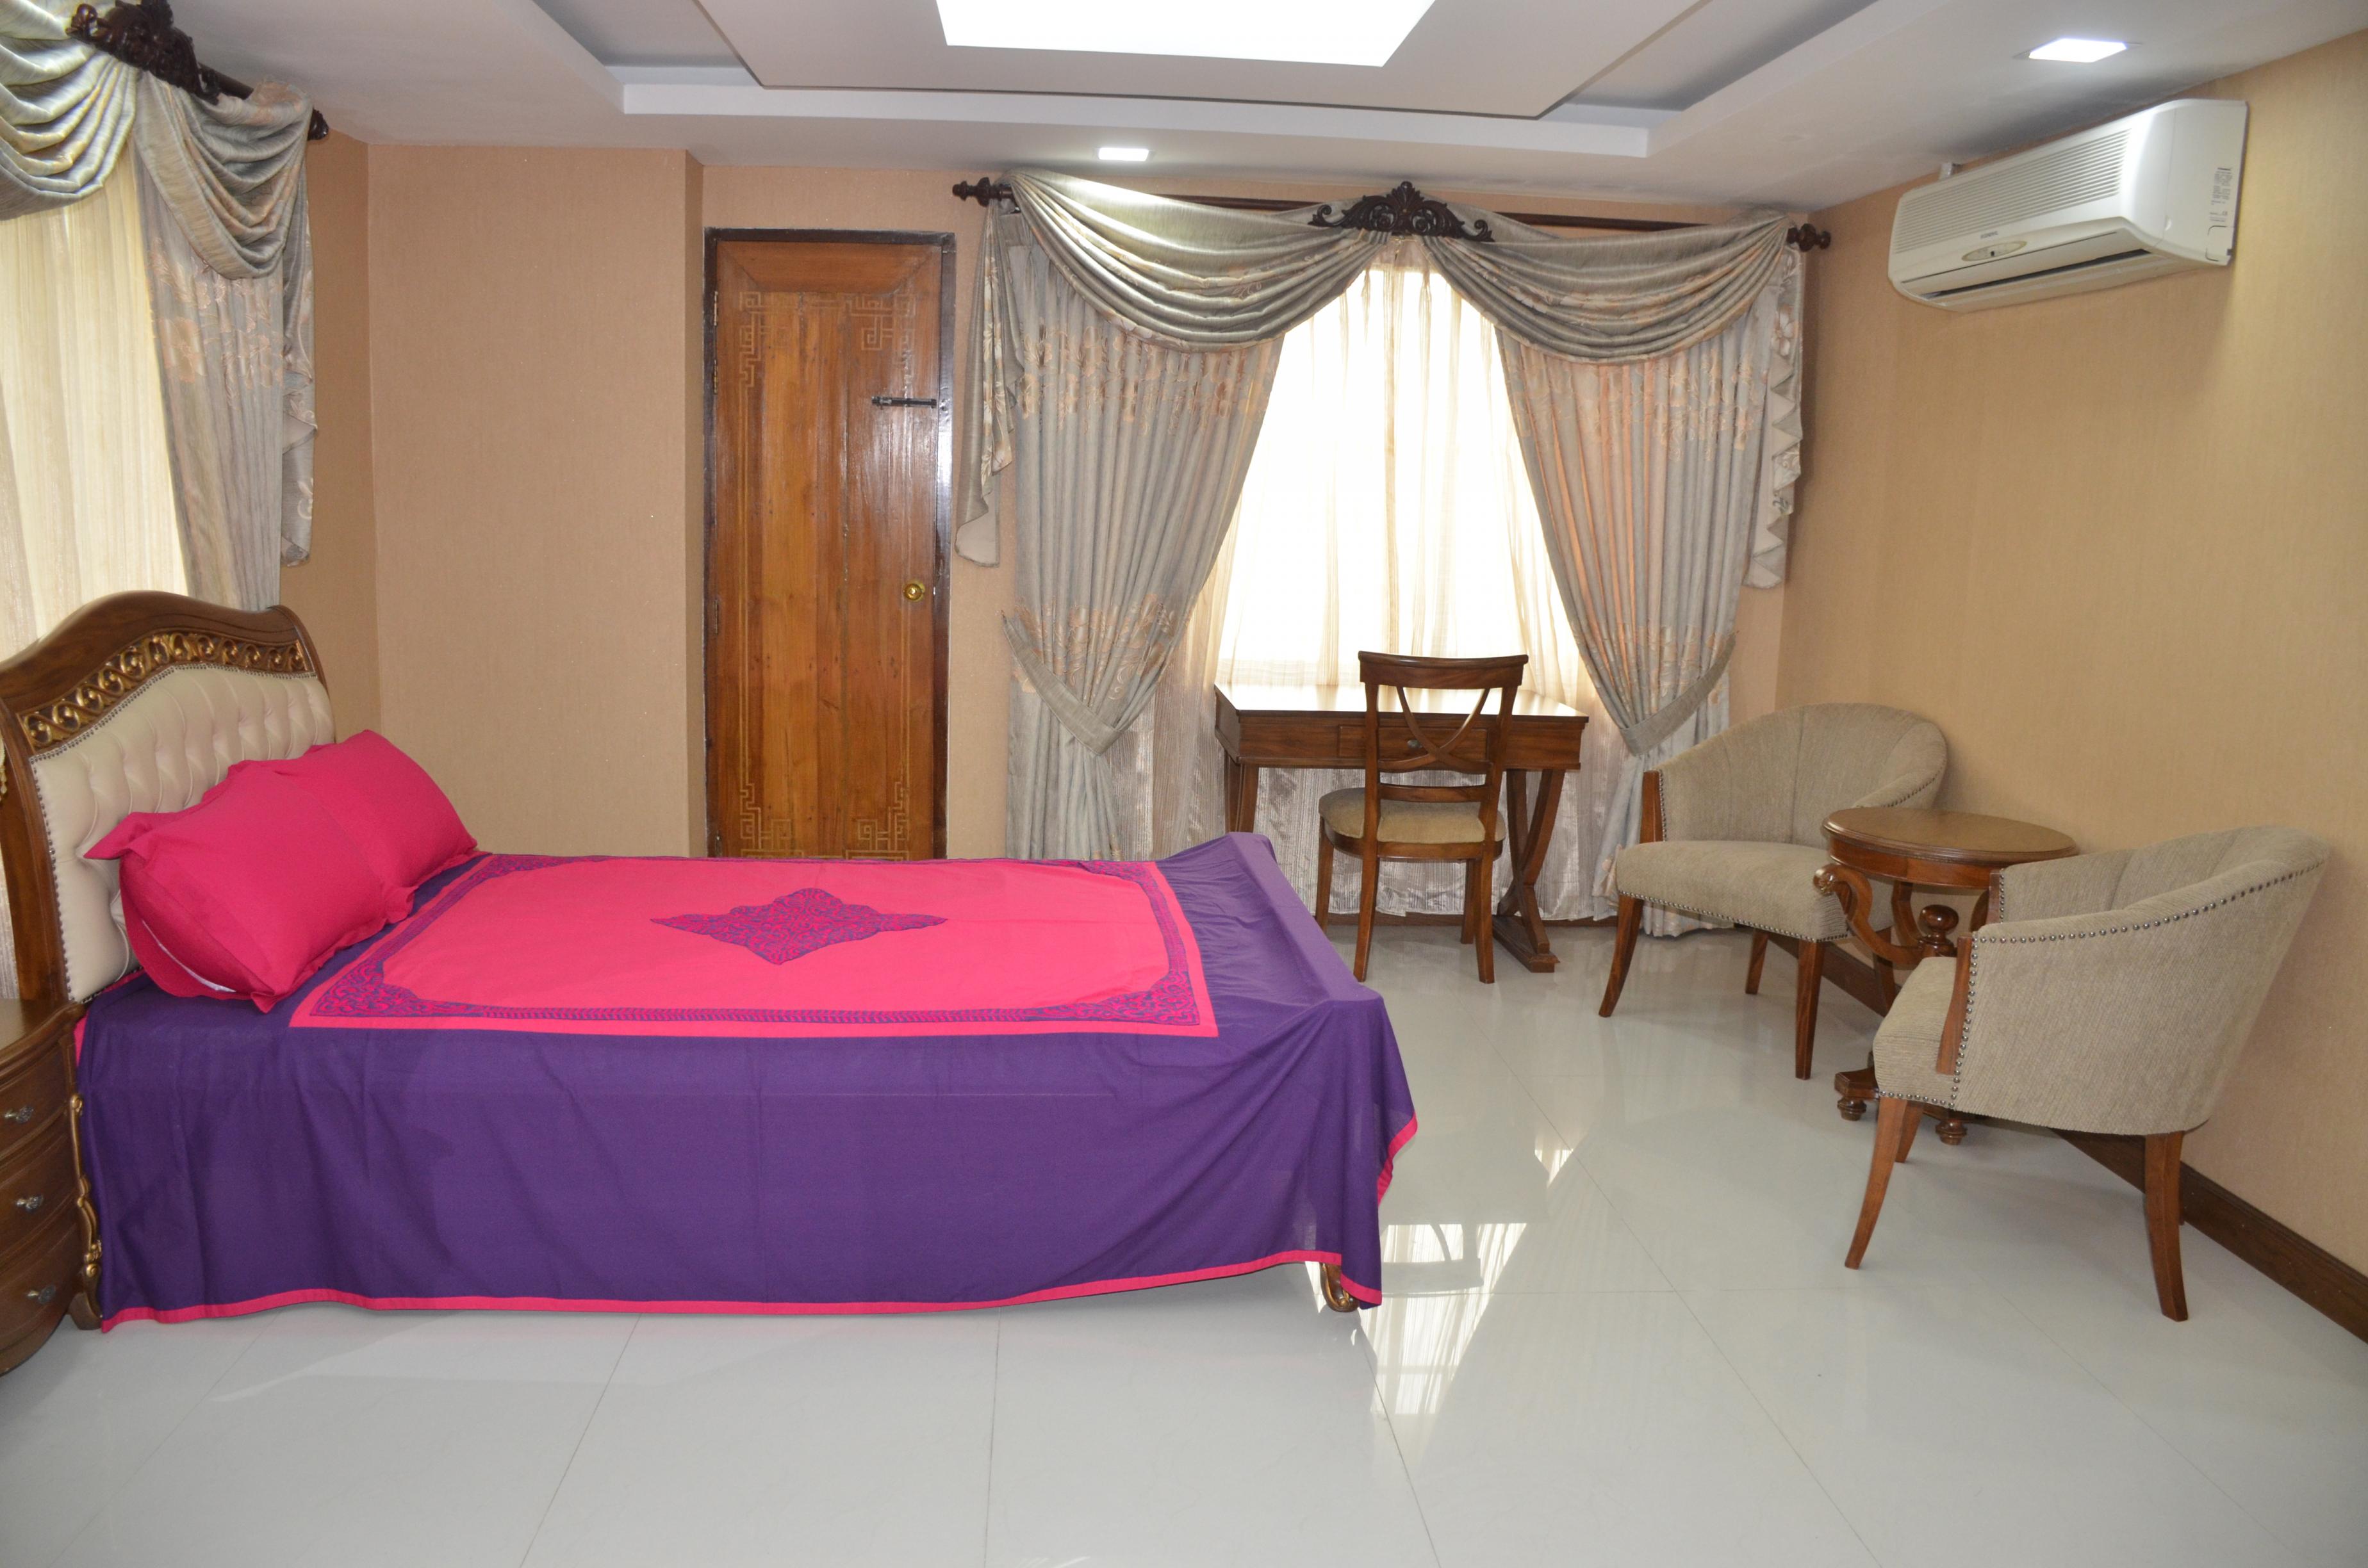 Dormitory and Cafeteria facilities at BPATC